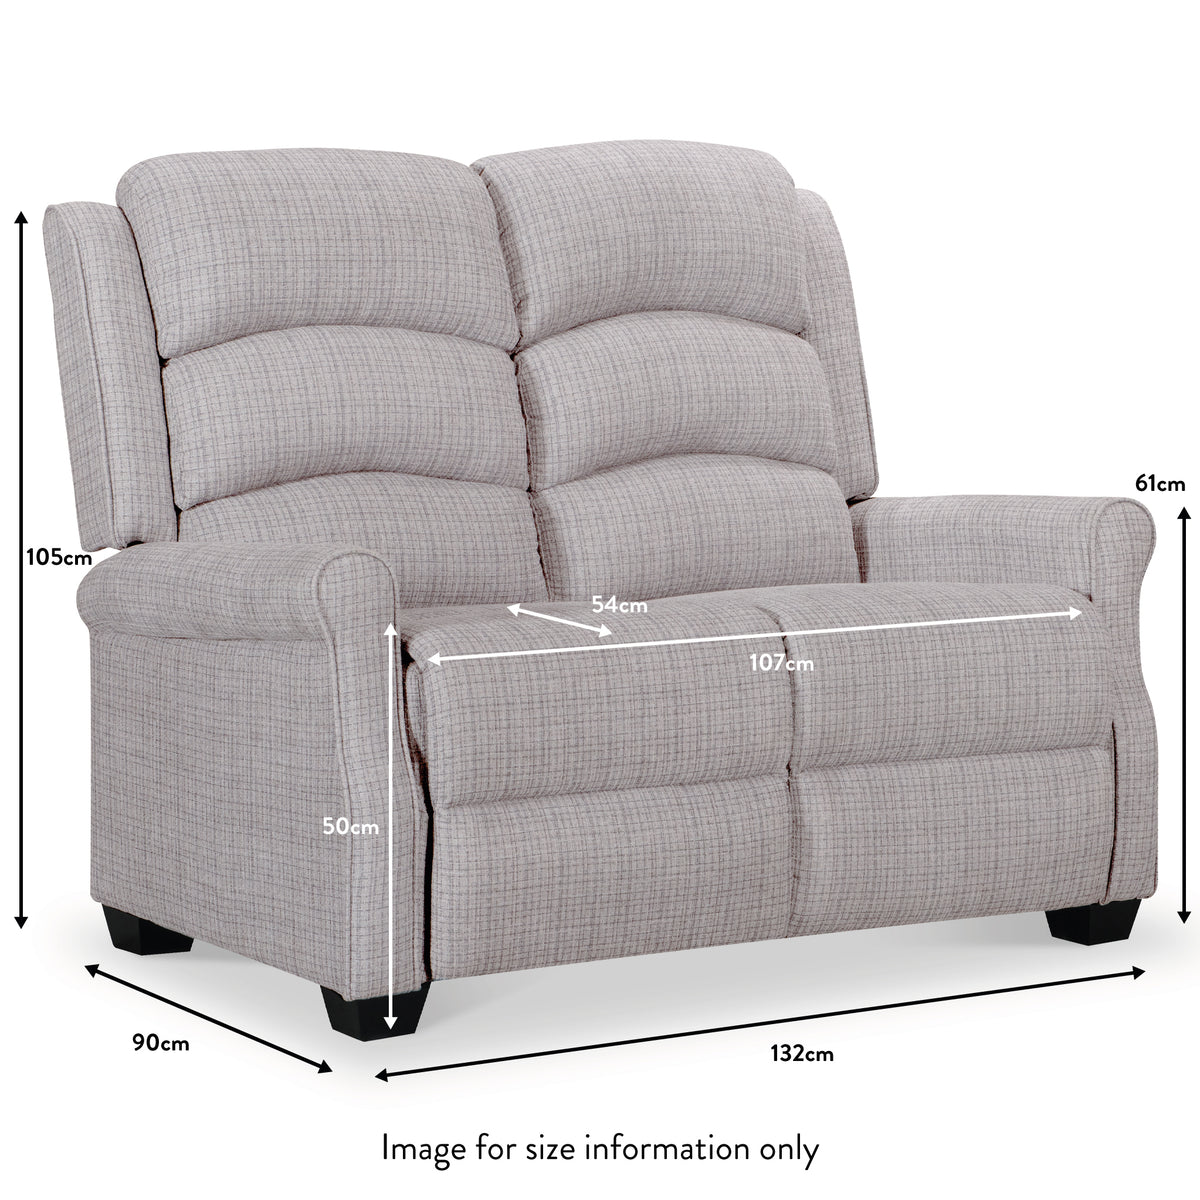 Edwin 2 Seater Sofa dimensions